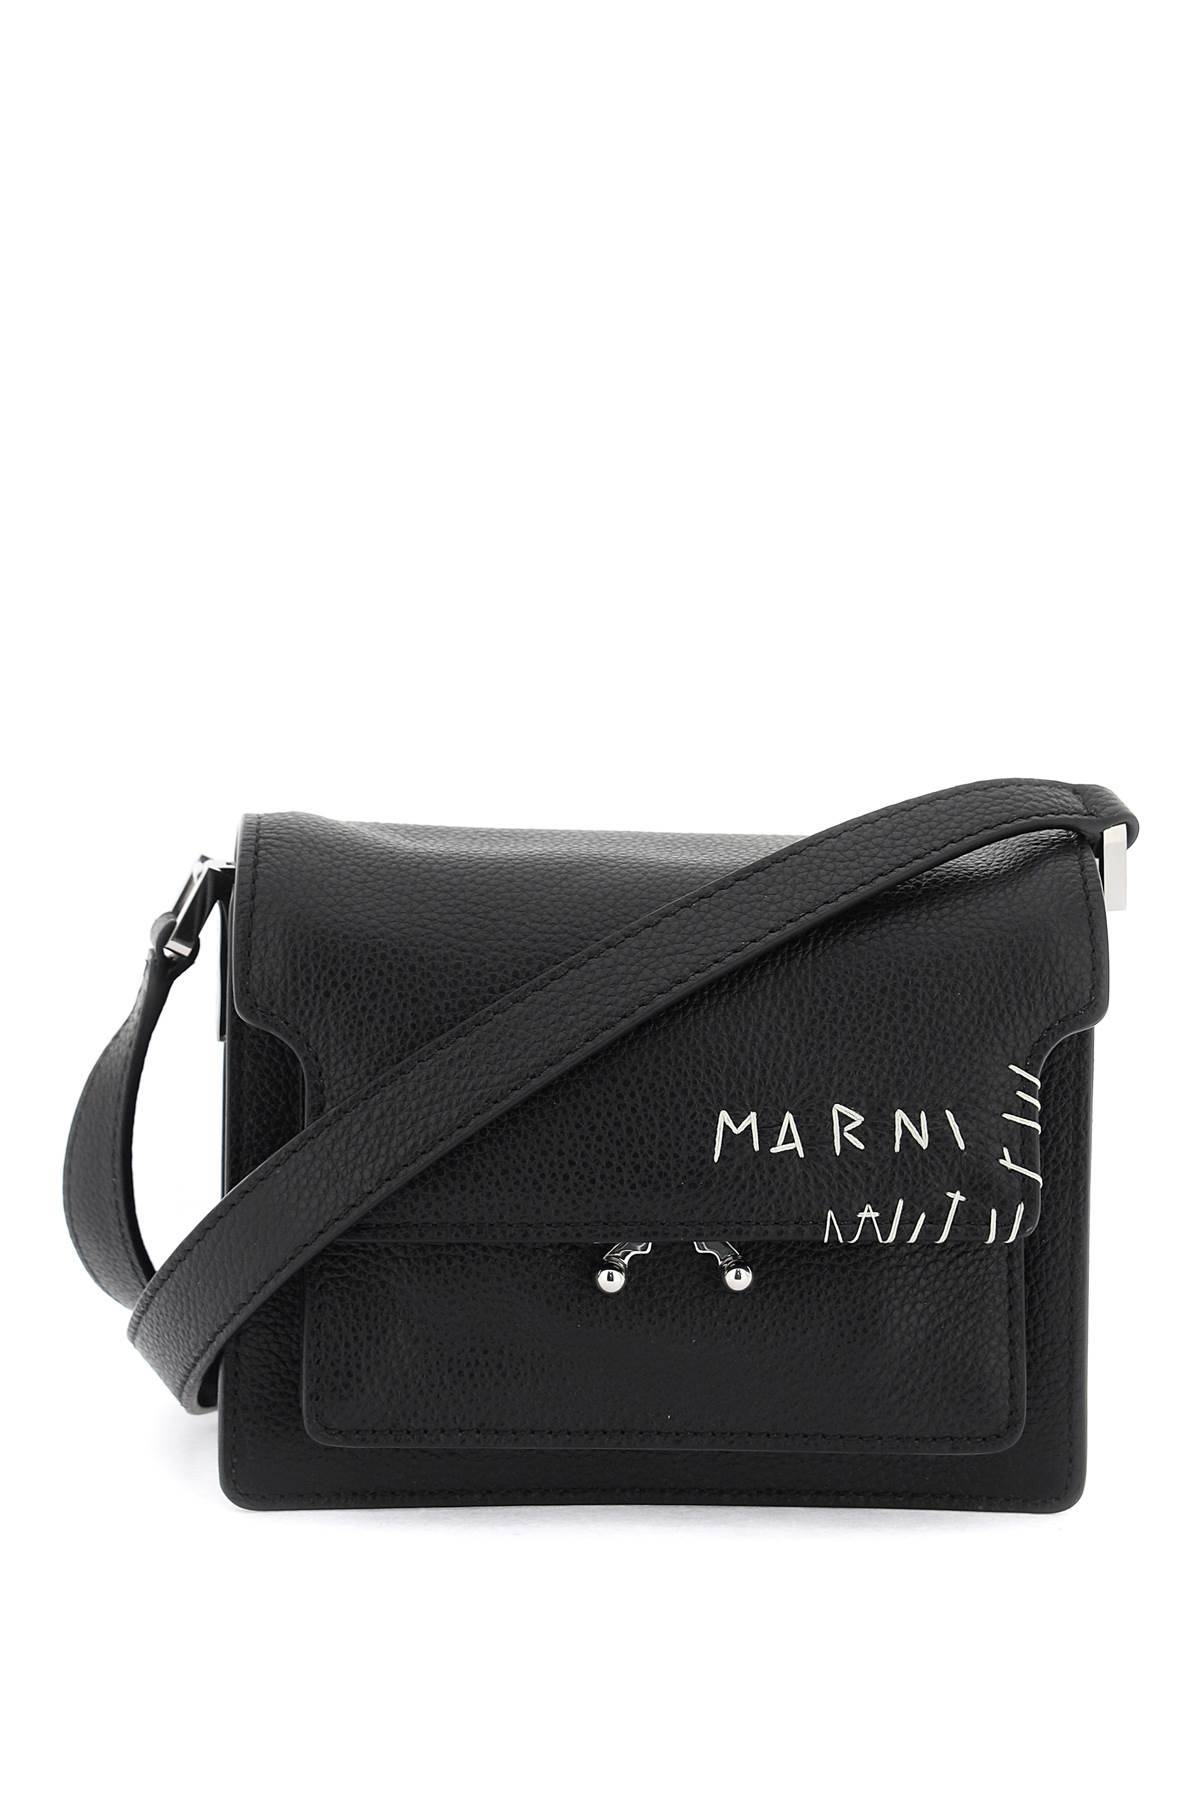 Marni MARNI mini soft trunk shoulder bag